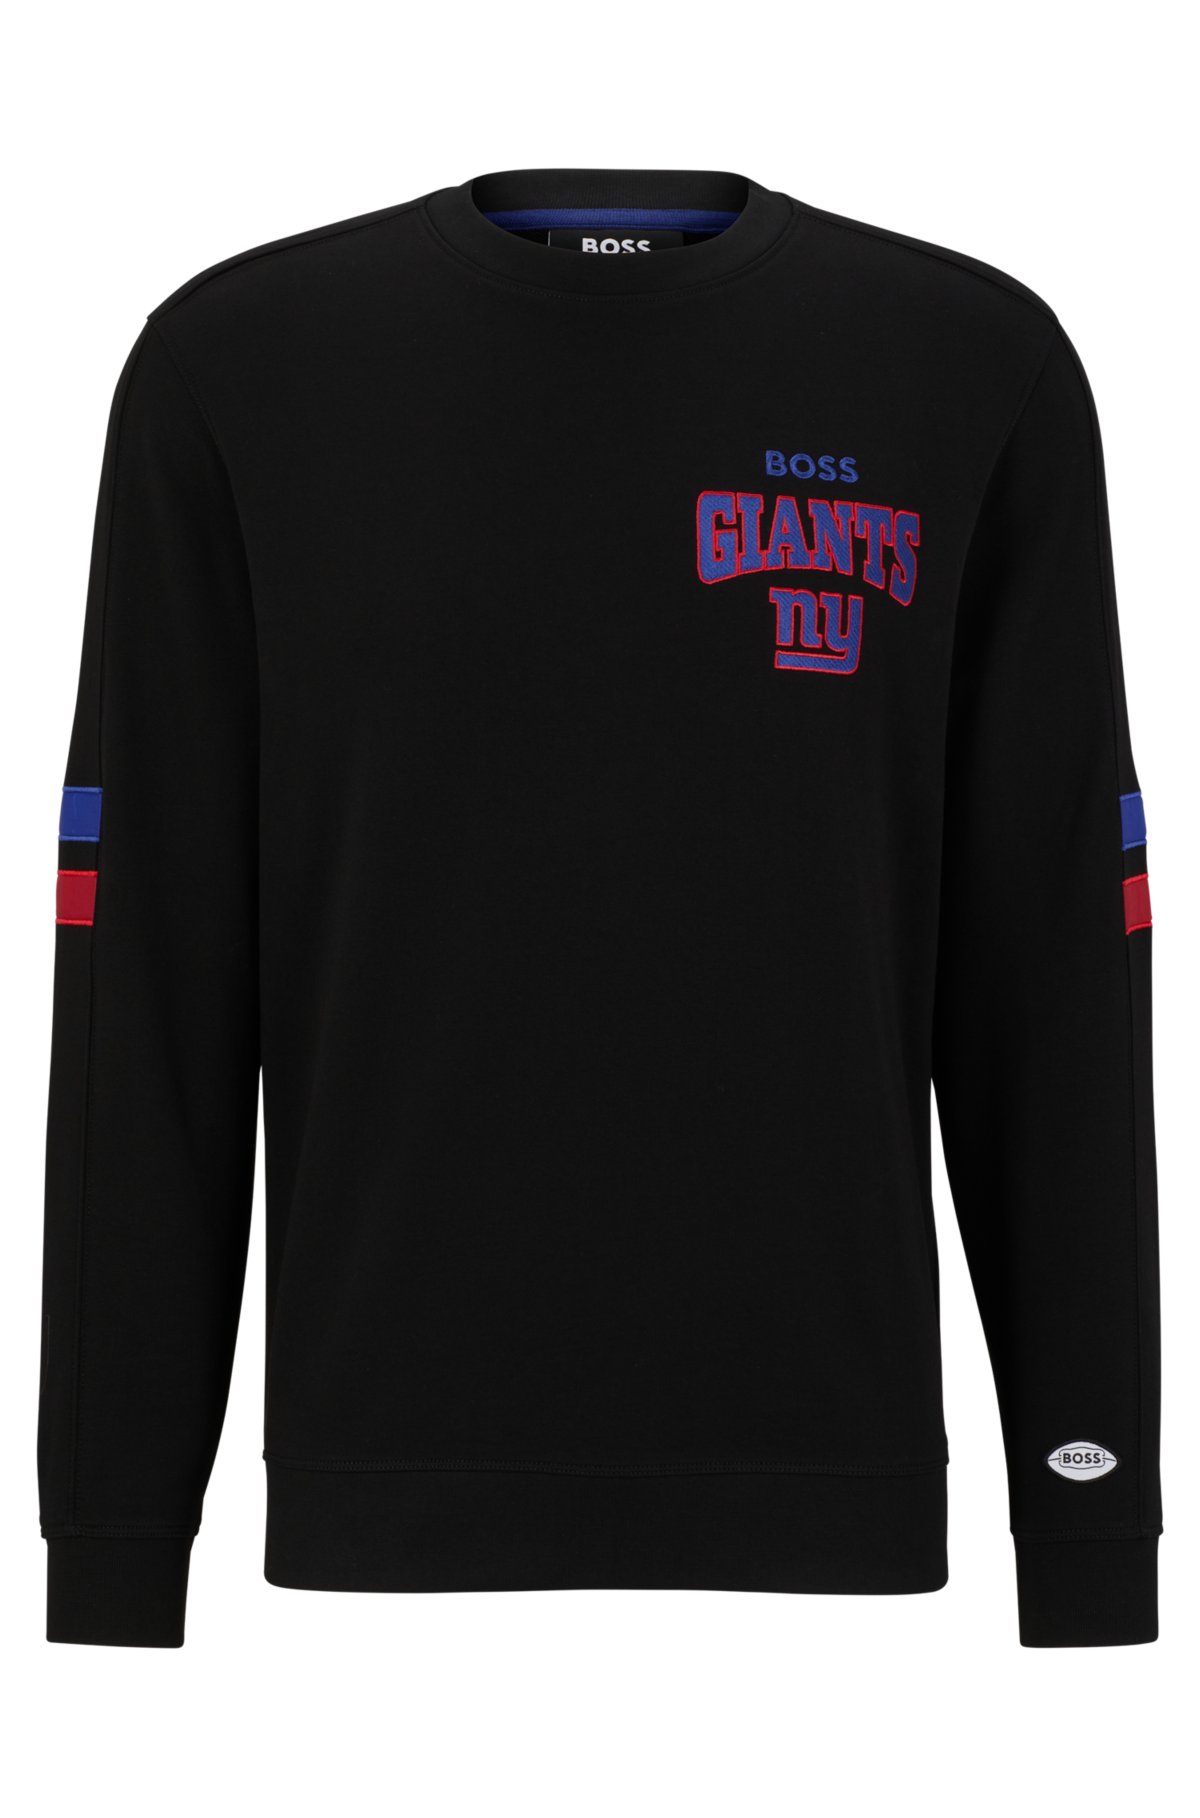 BOSS x NFL cotton-terry sweatshirt with collaborative branding, Giants